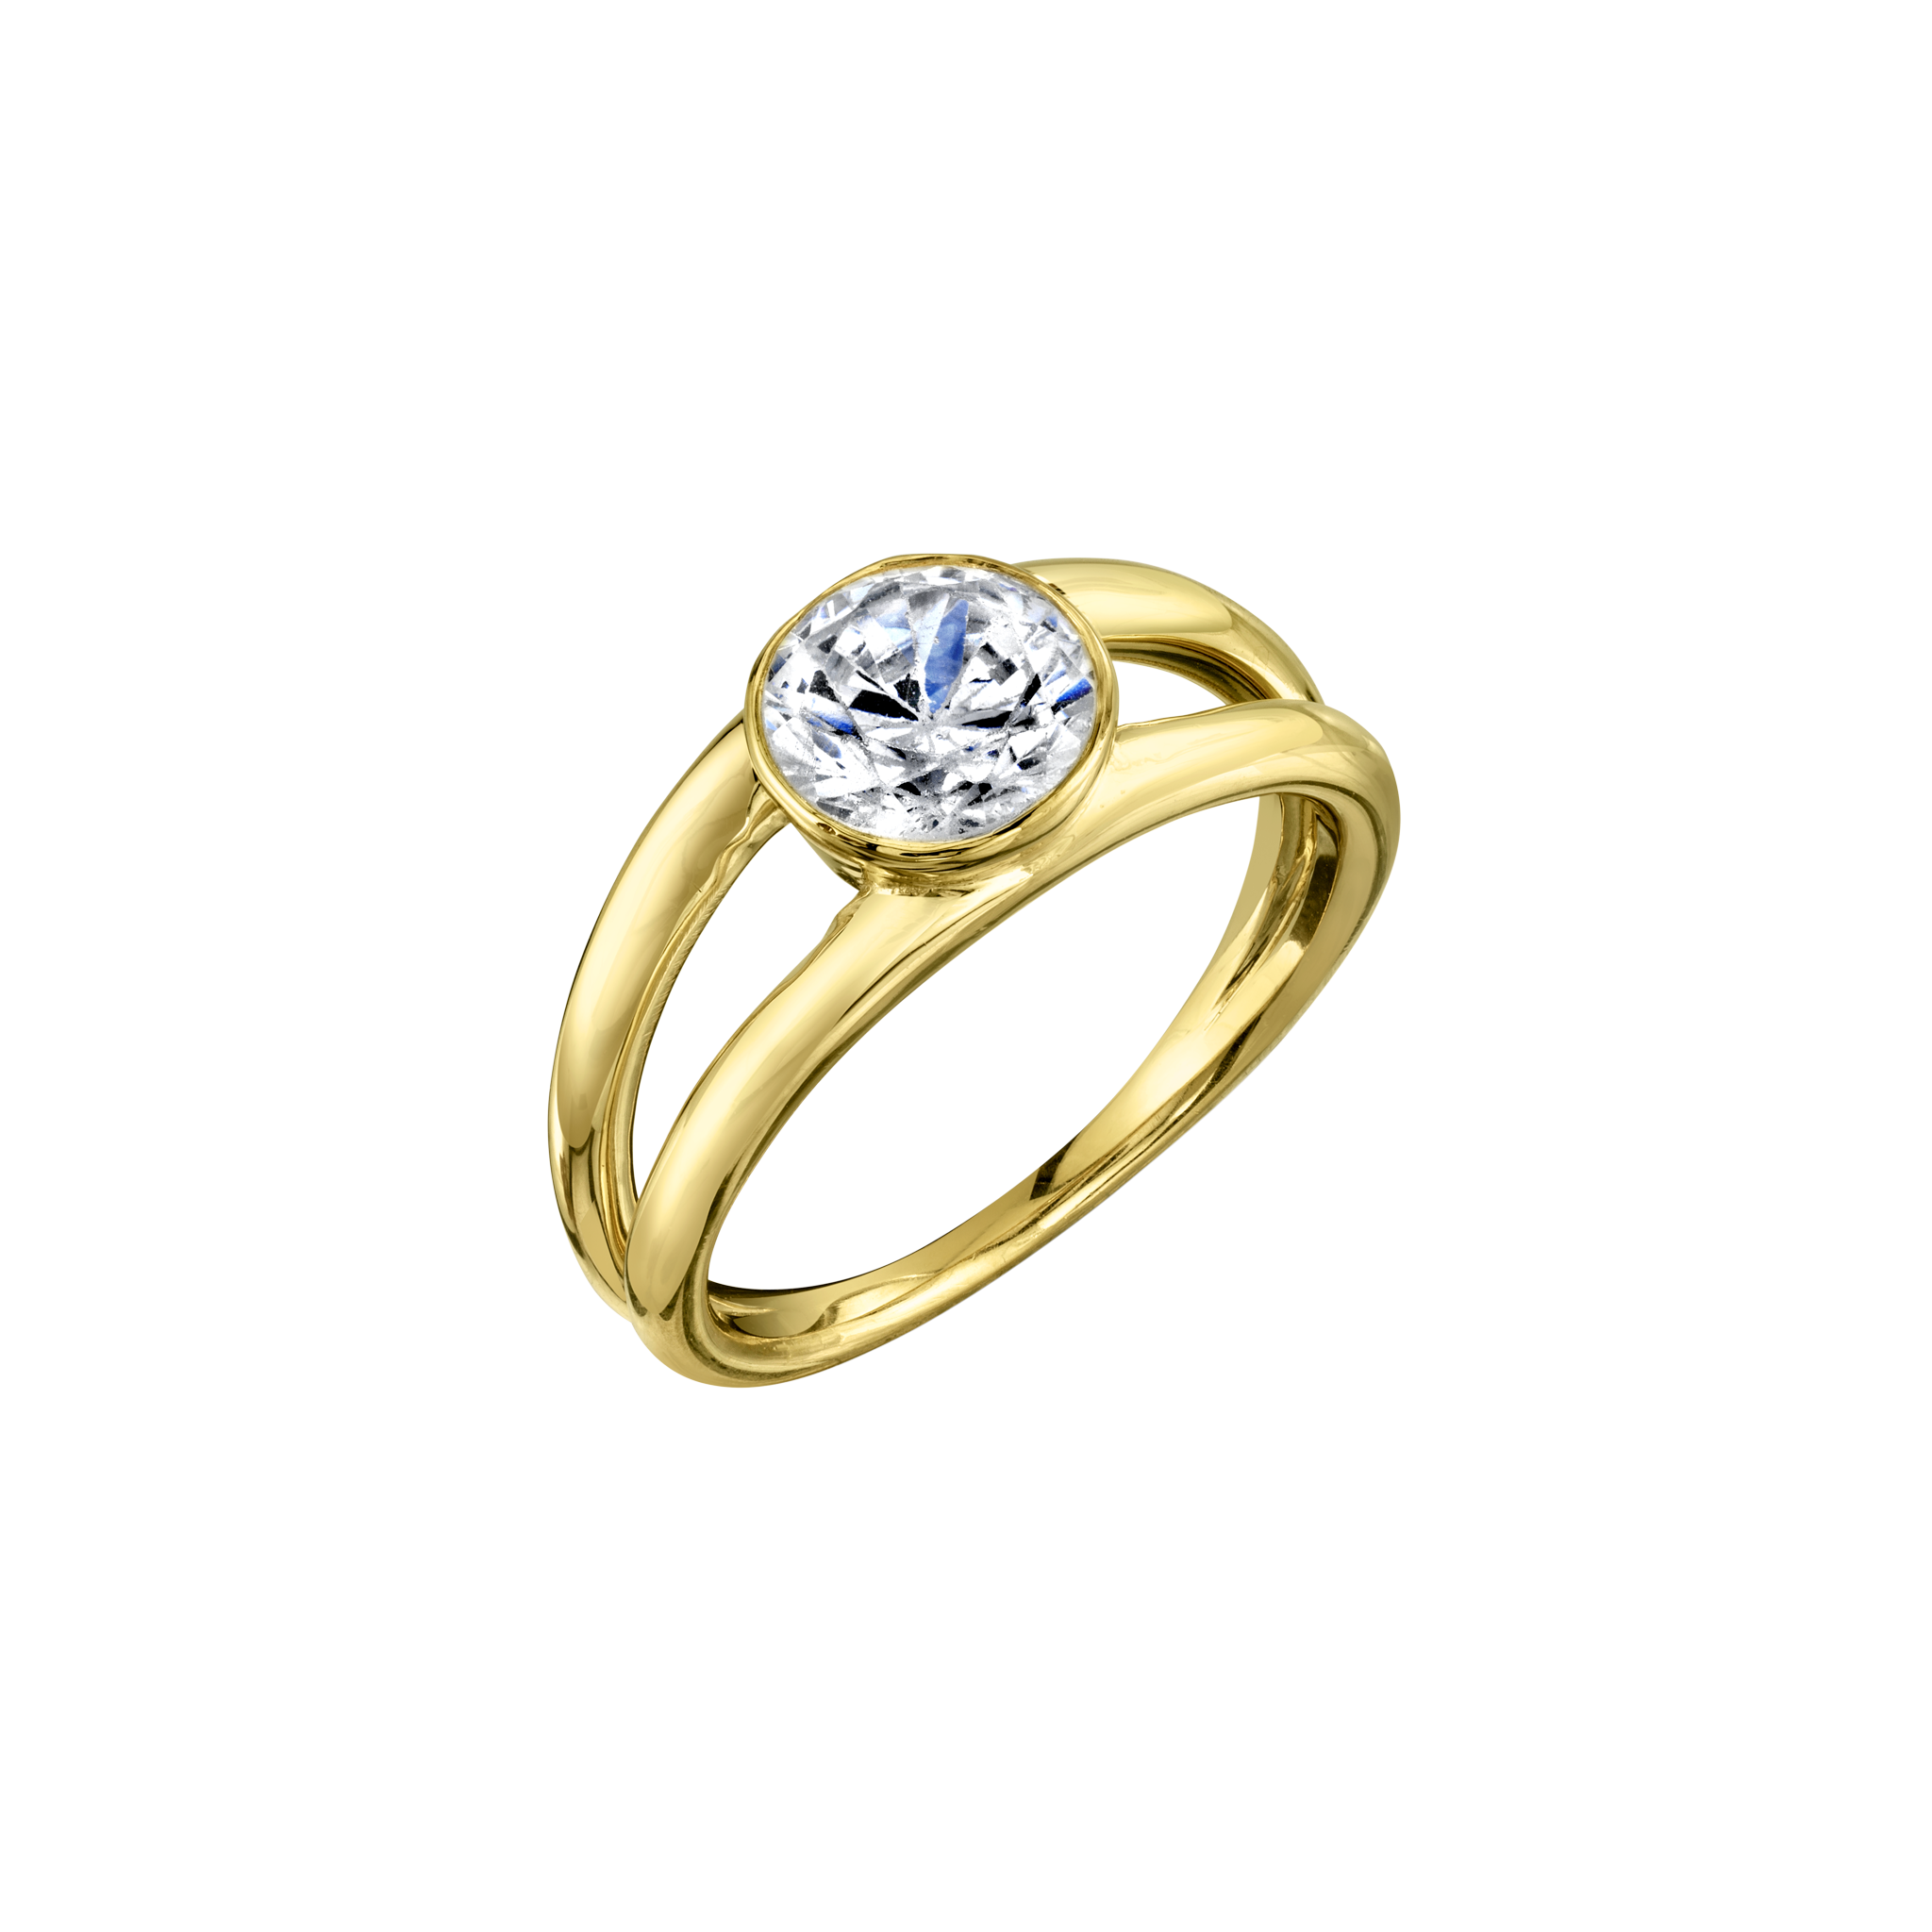 Double Eternal Ring with Round Diamond - Gabriela Artigas